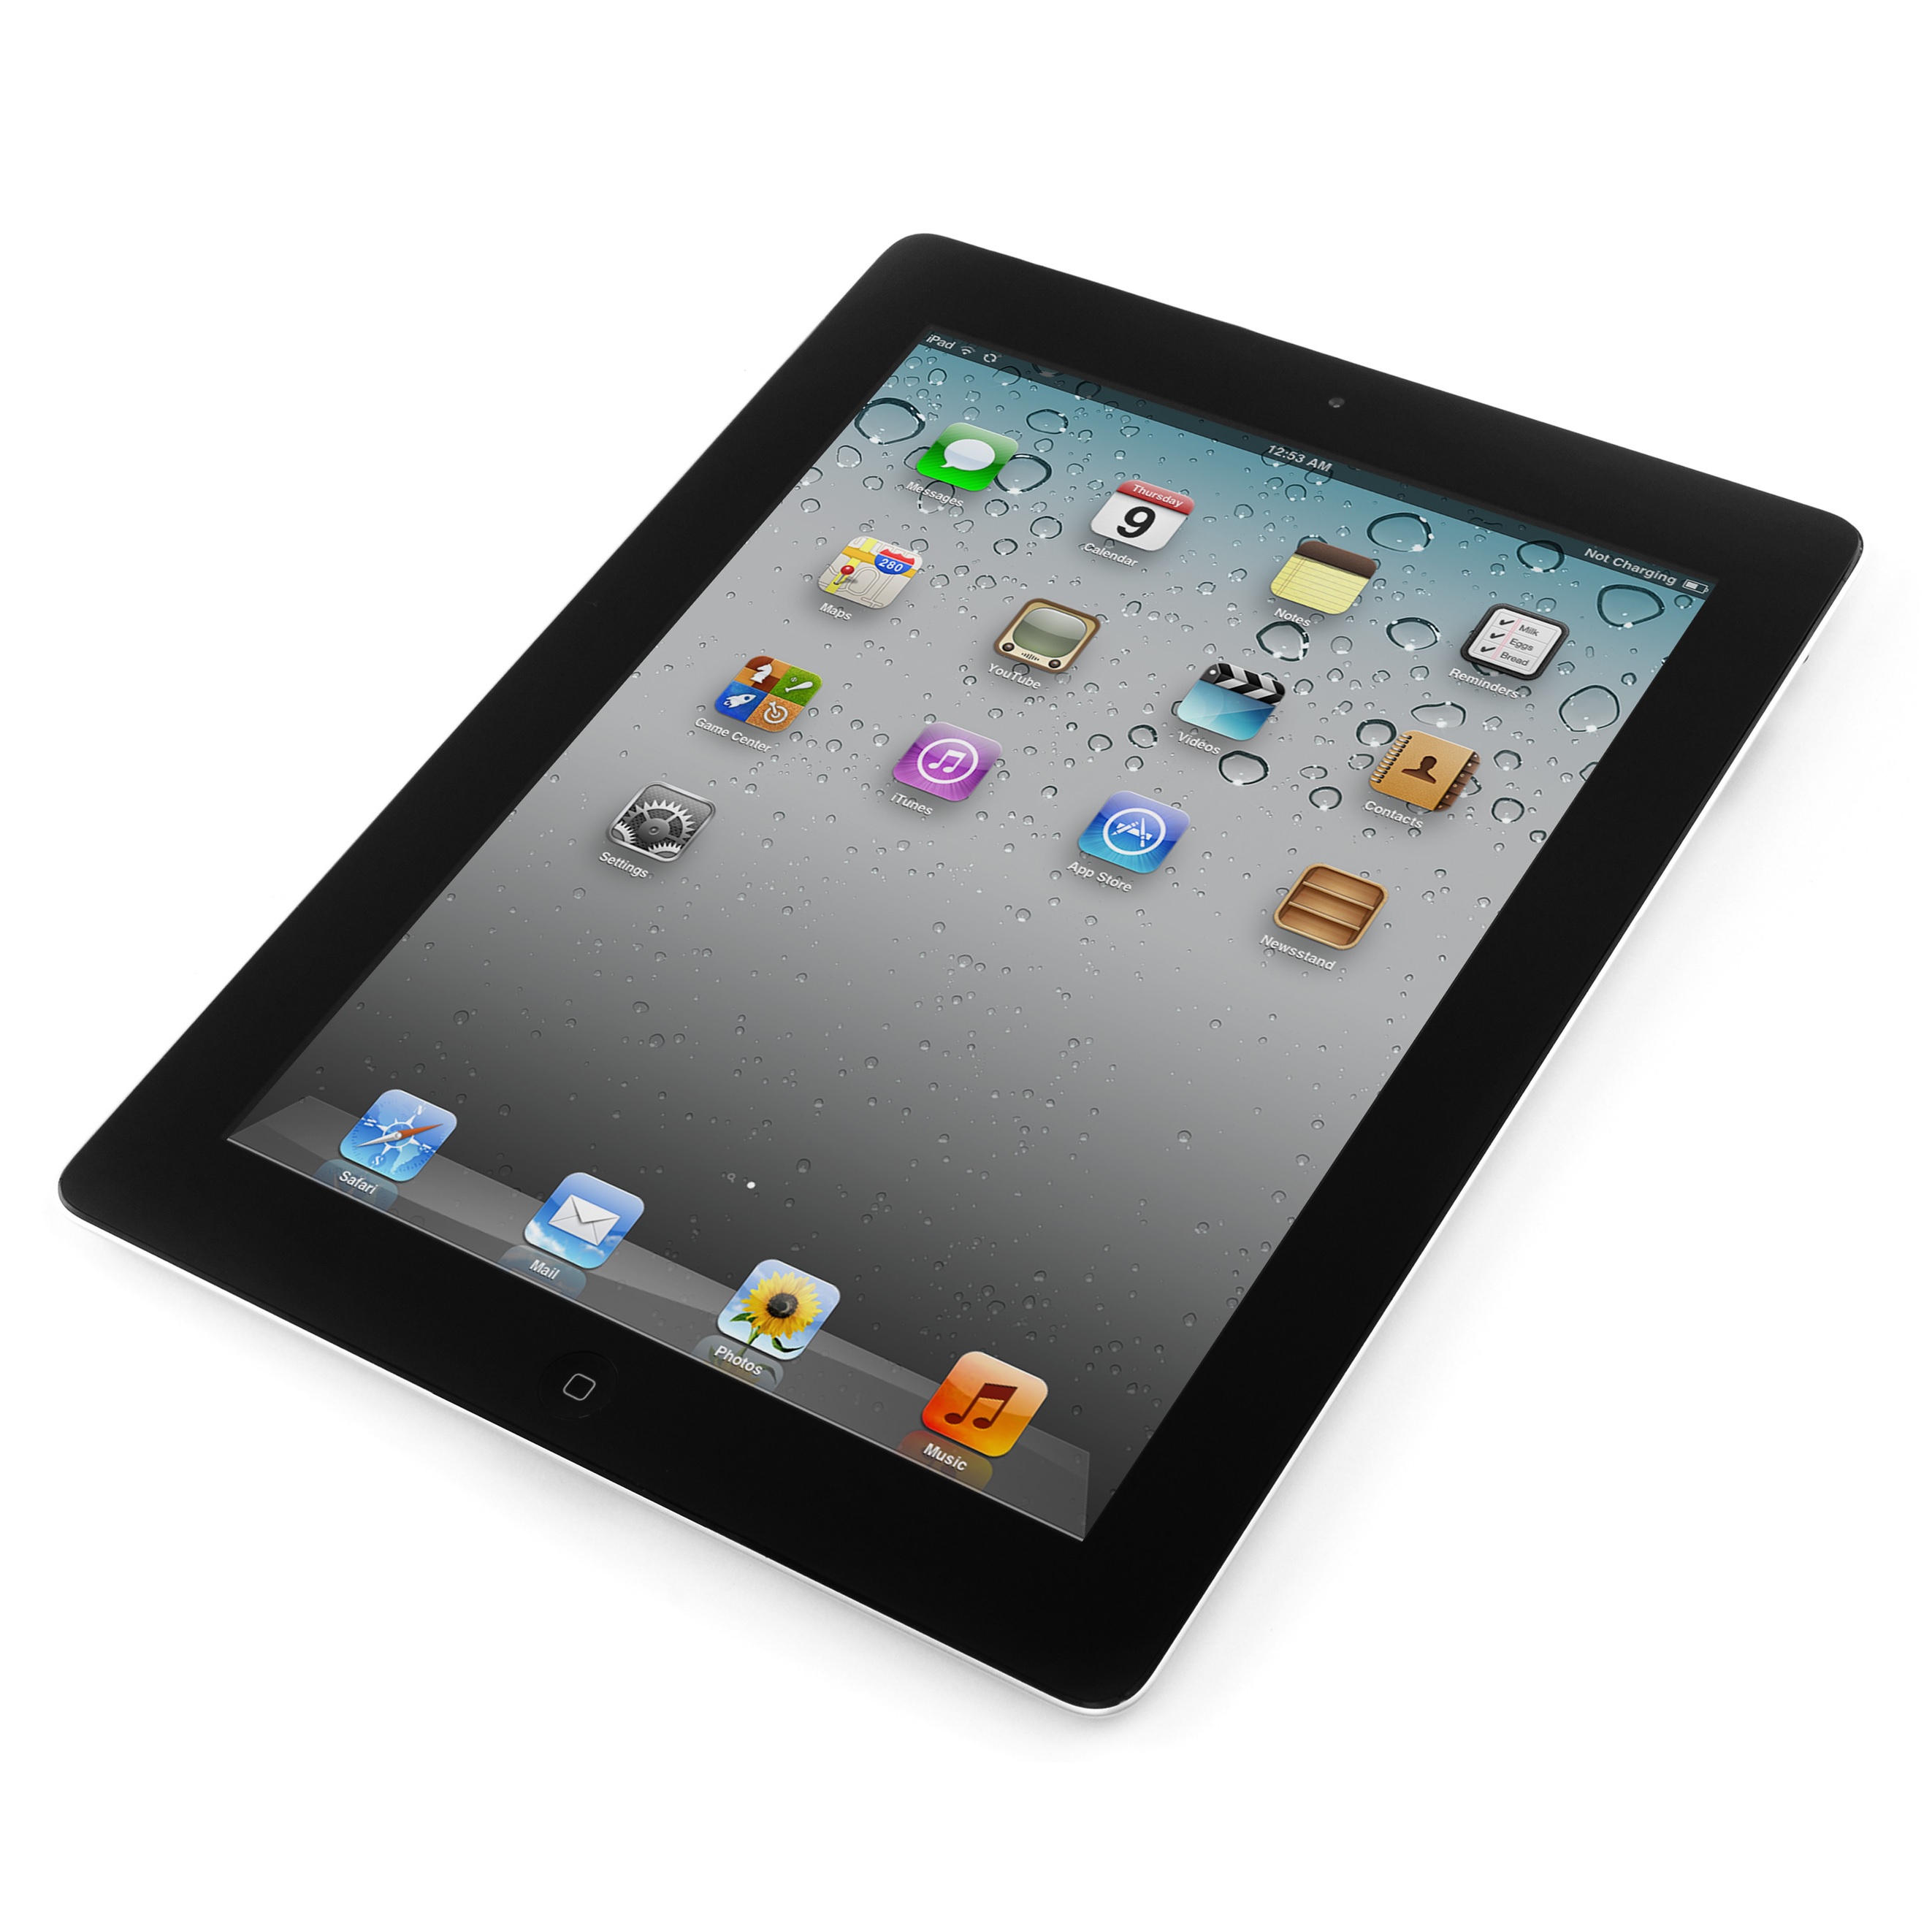 Restored Apple iPad 2 9.7inch 16GB WiFi, Black (Refurbished) - image 1 of 3